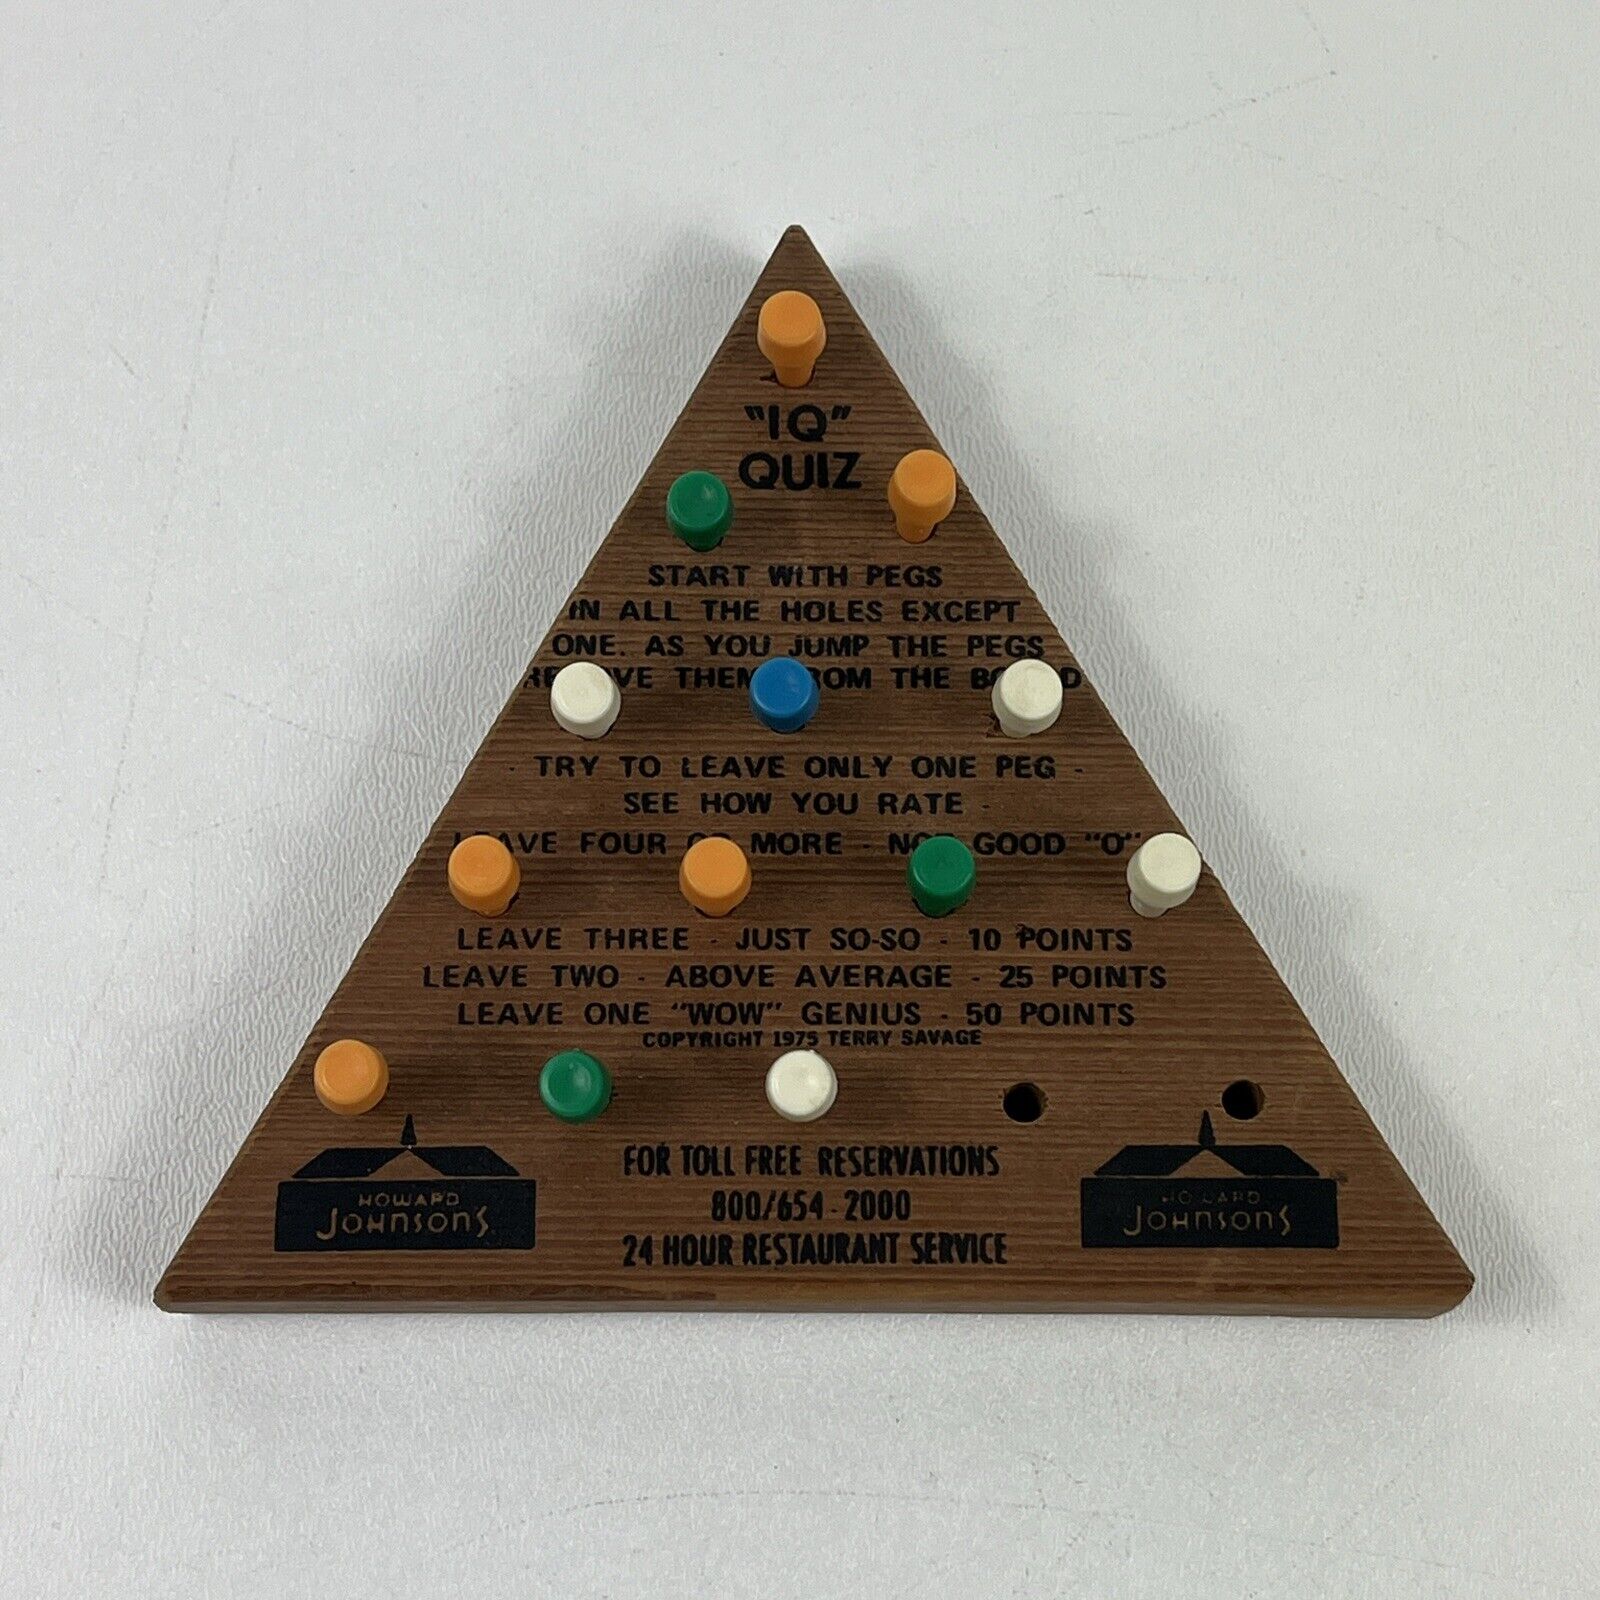 Howard Johnson’s Restaurant “IQ” Quiz Peg Game Wood Triangle VINTAGE READ 1975